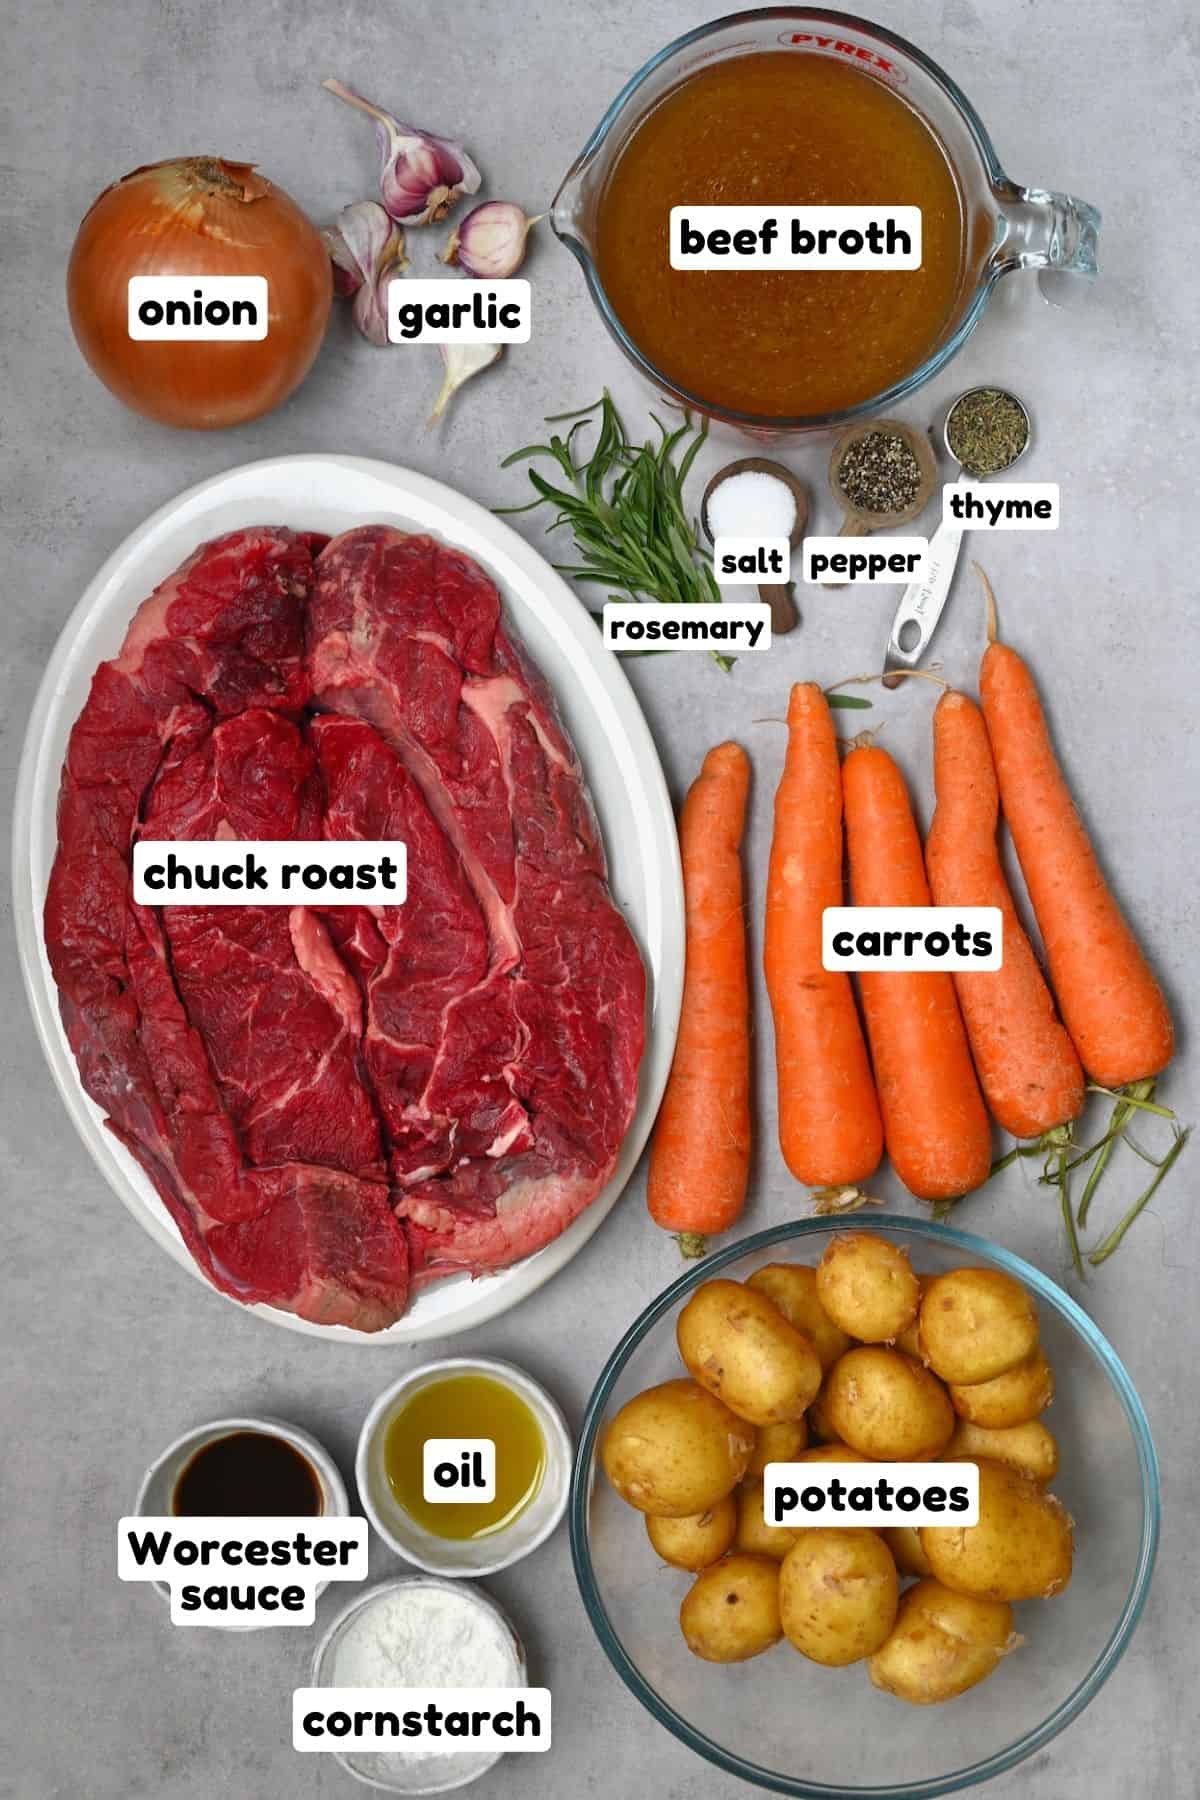 Ingredients for crockpot roast